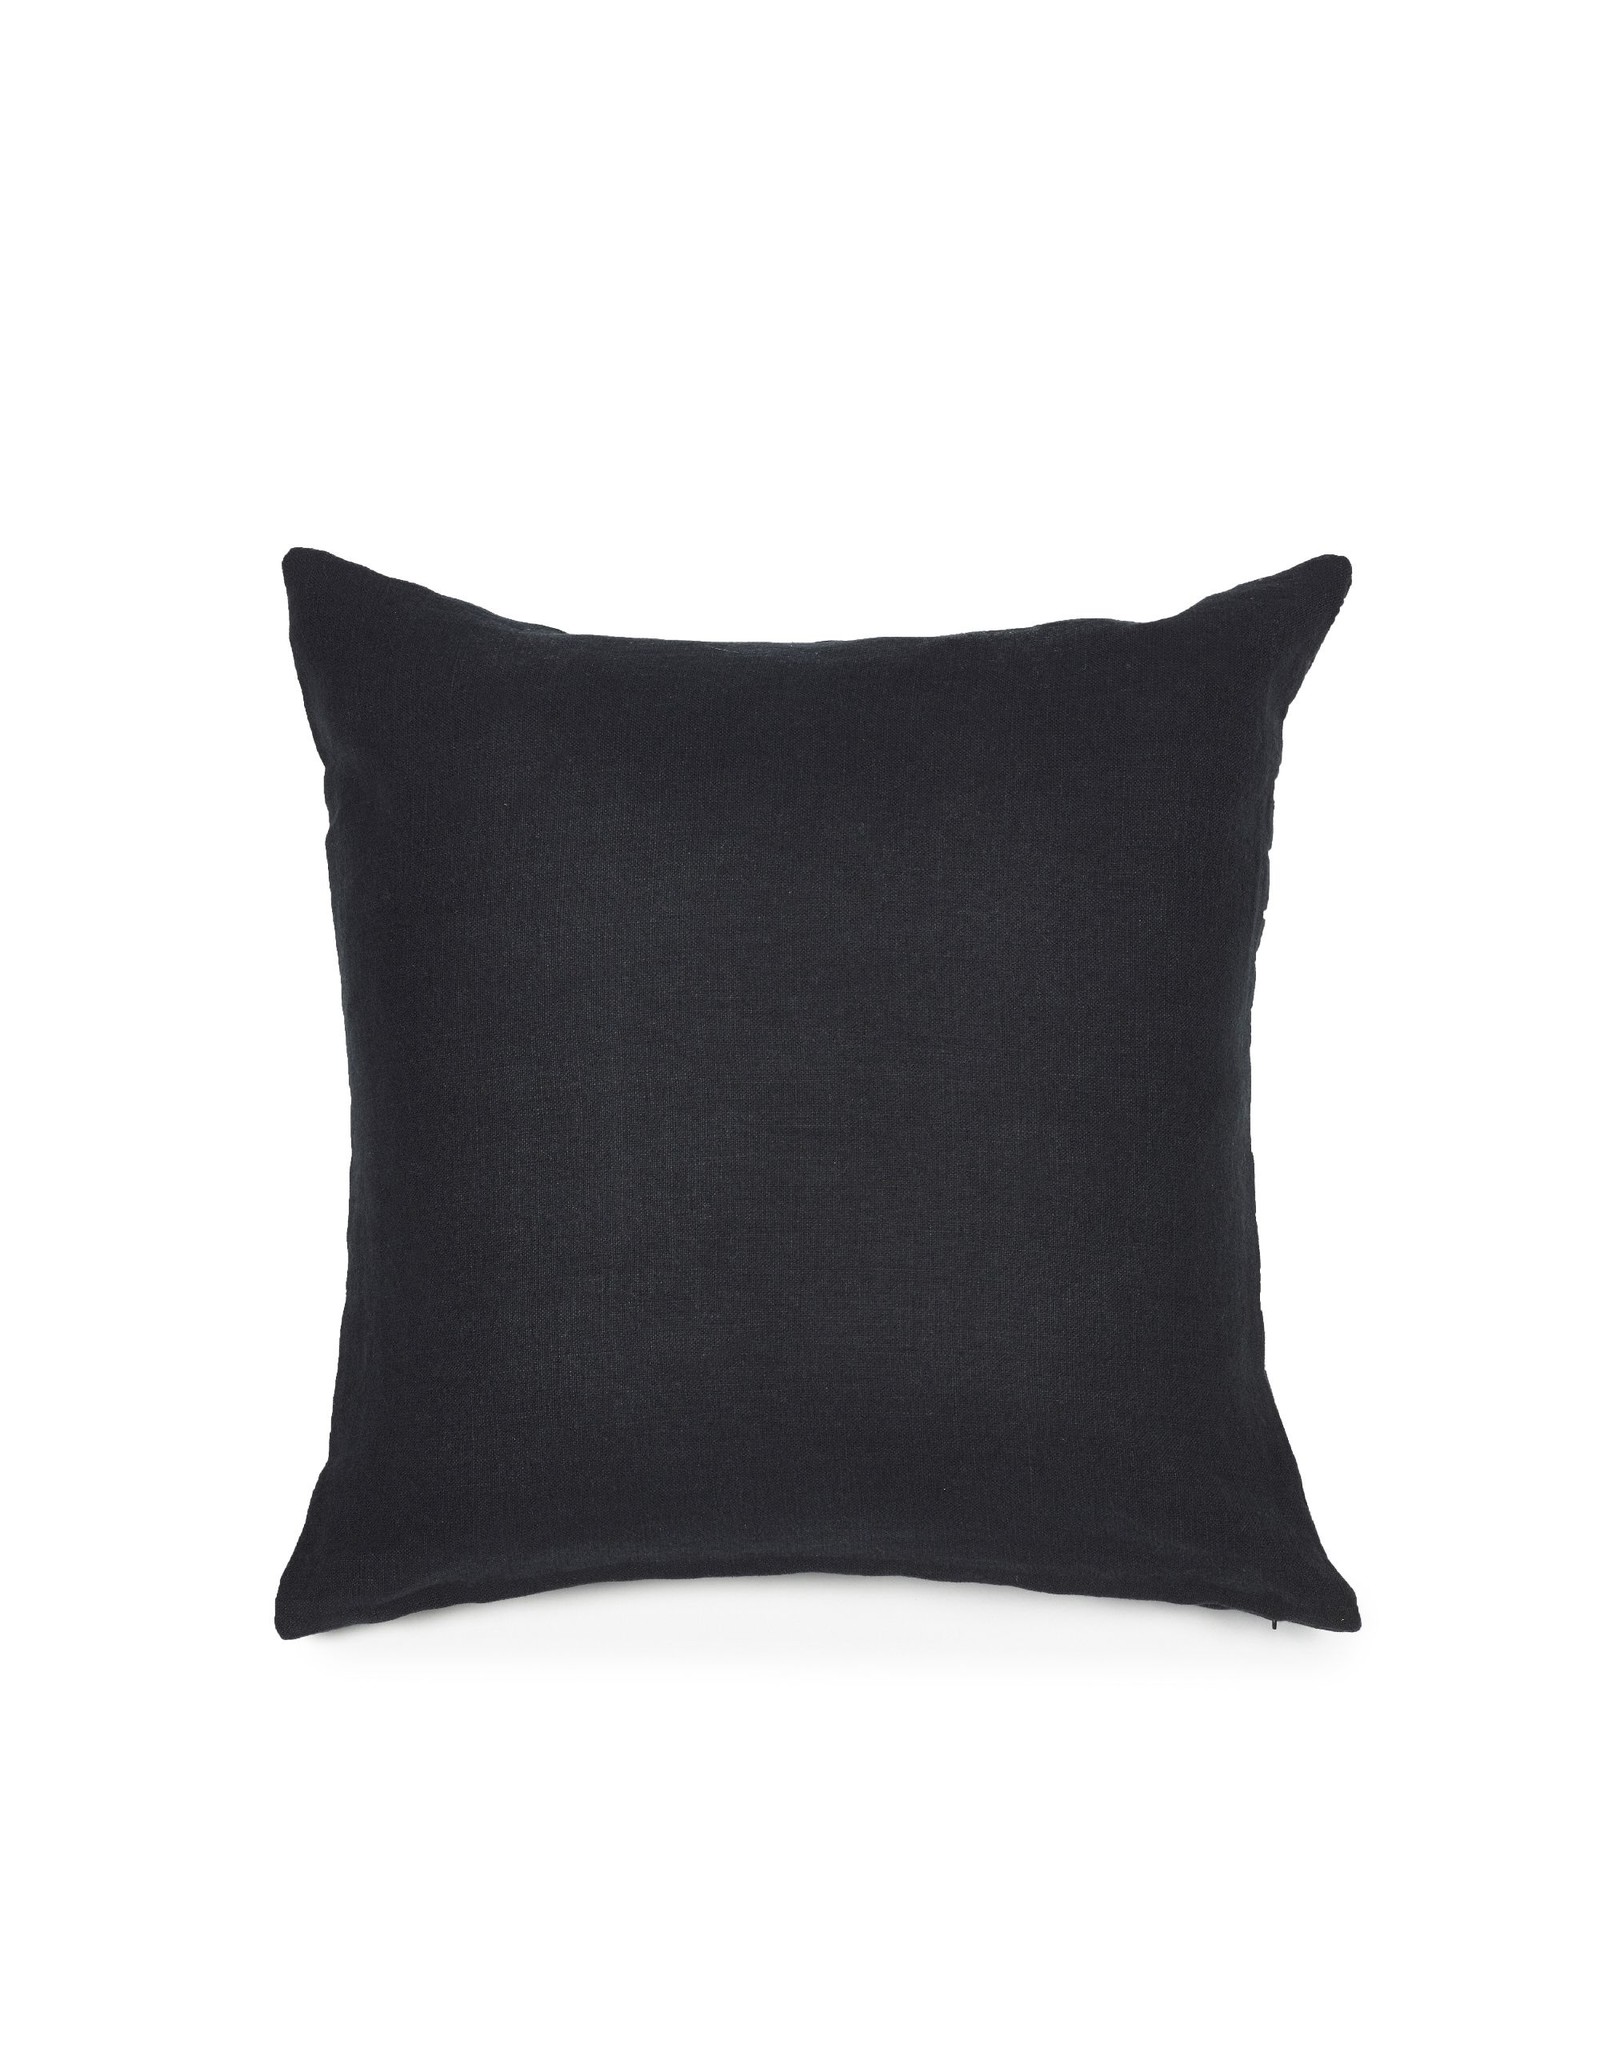 Hudson Black Pillow 20x20